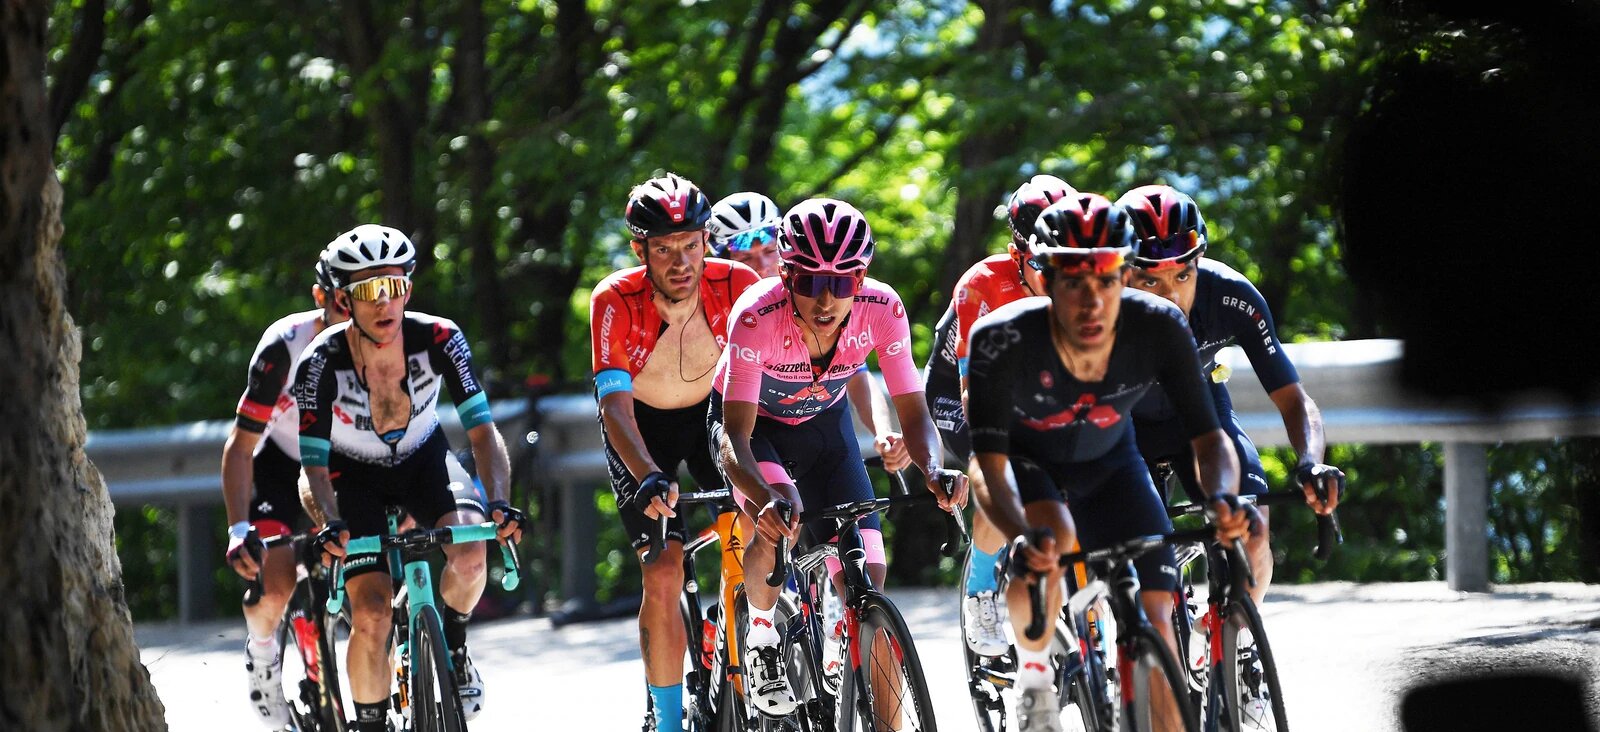 Giro Lombardia organisers ask Ganna to move Hour record bid